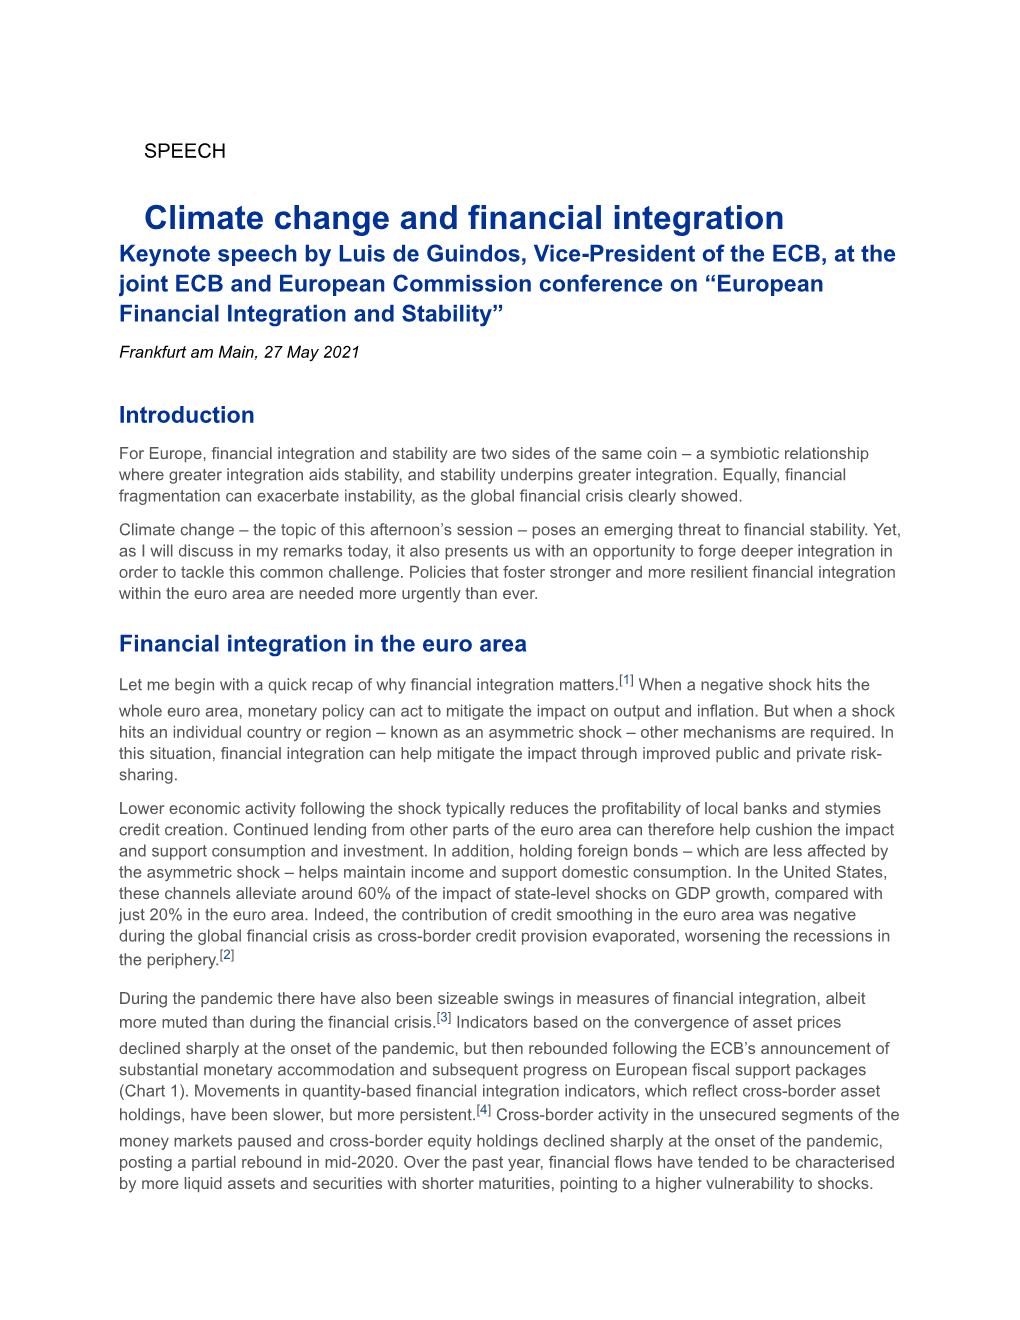 Luis De Guindos: Climate Change and Financial Integration